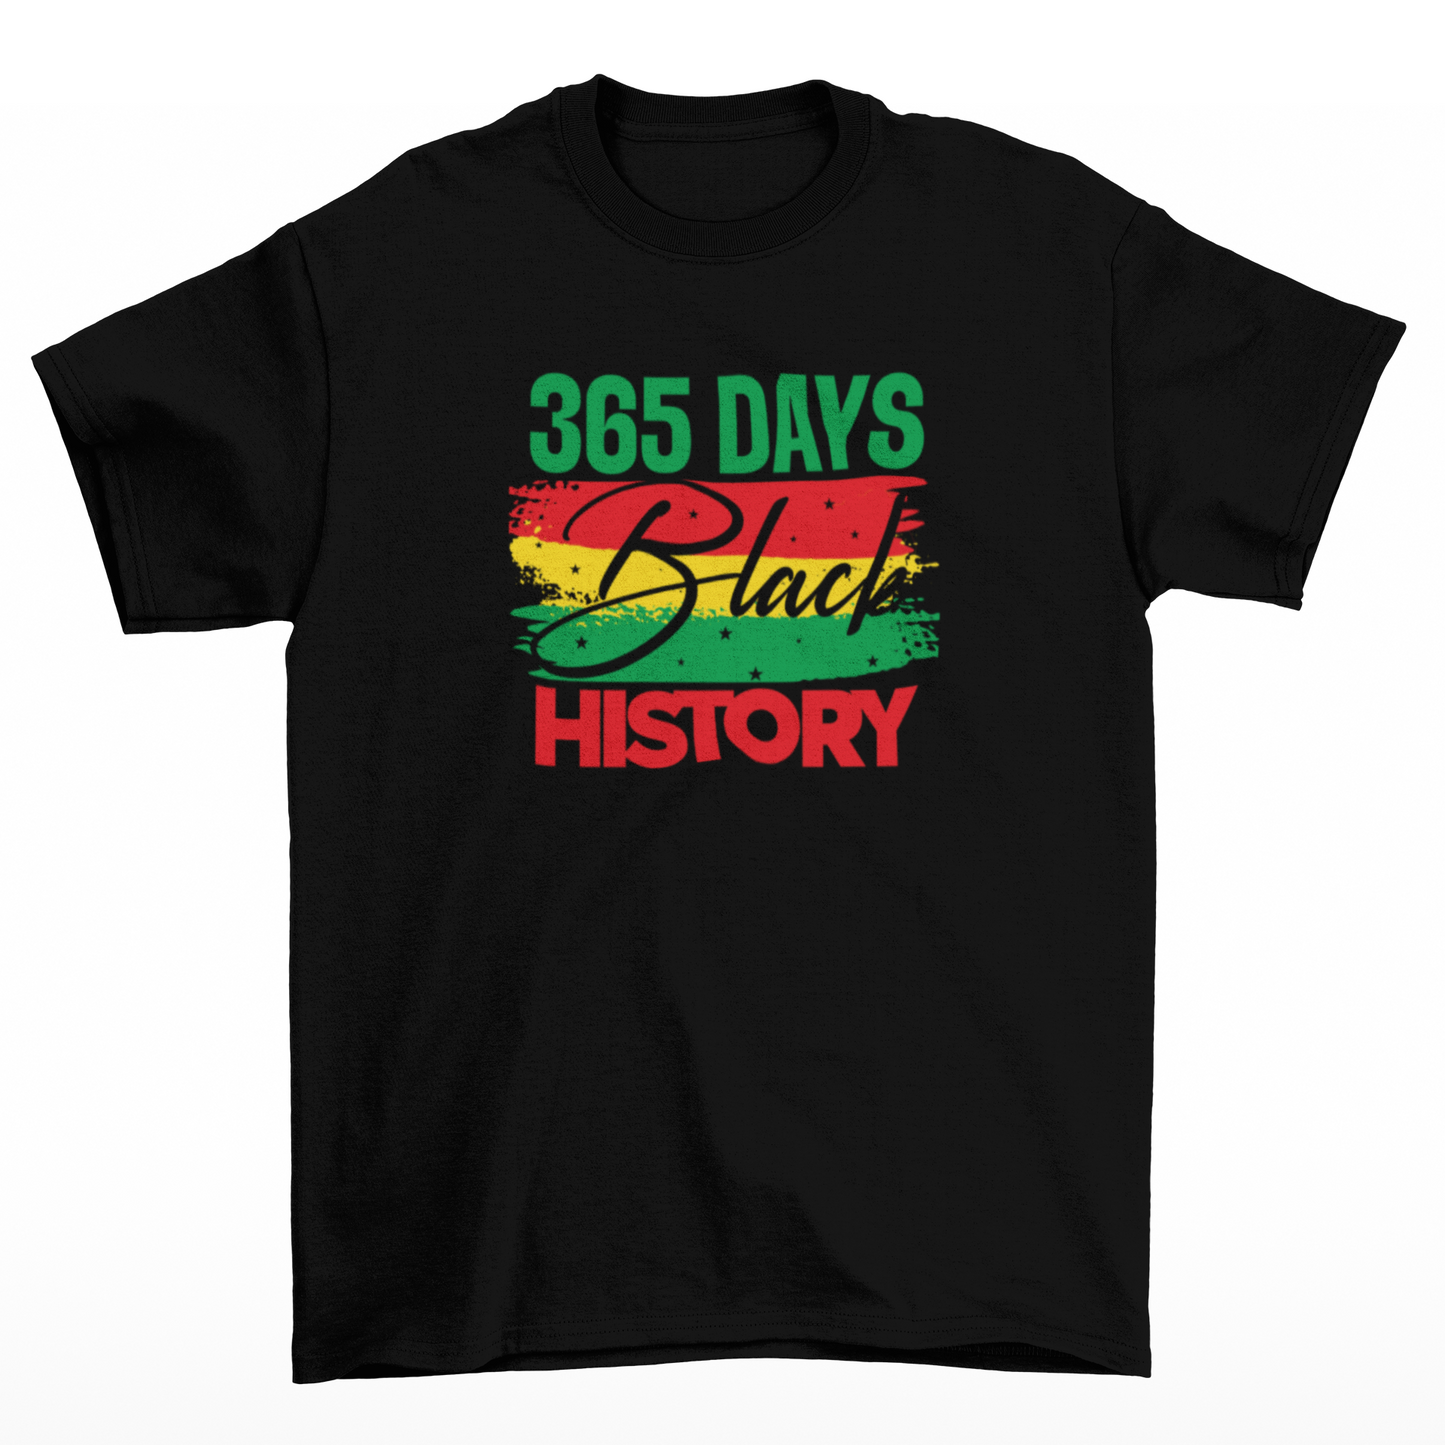 365 Black History